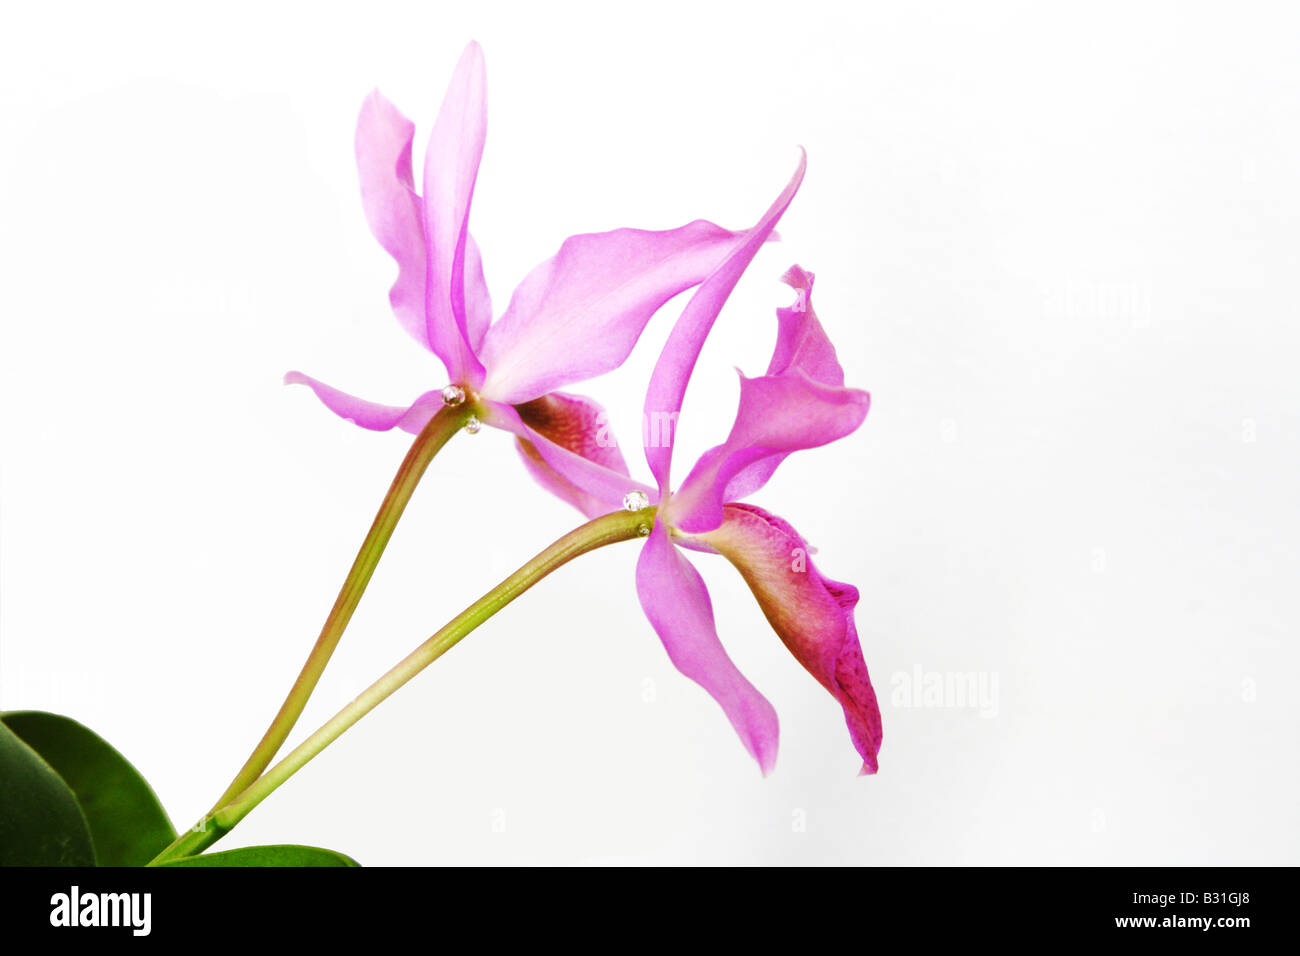 Cattleya guatemalensis a natural hybrid orchid between C aurantiaca and C skinneri Stock Photo